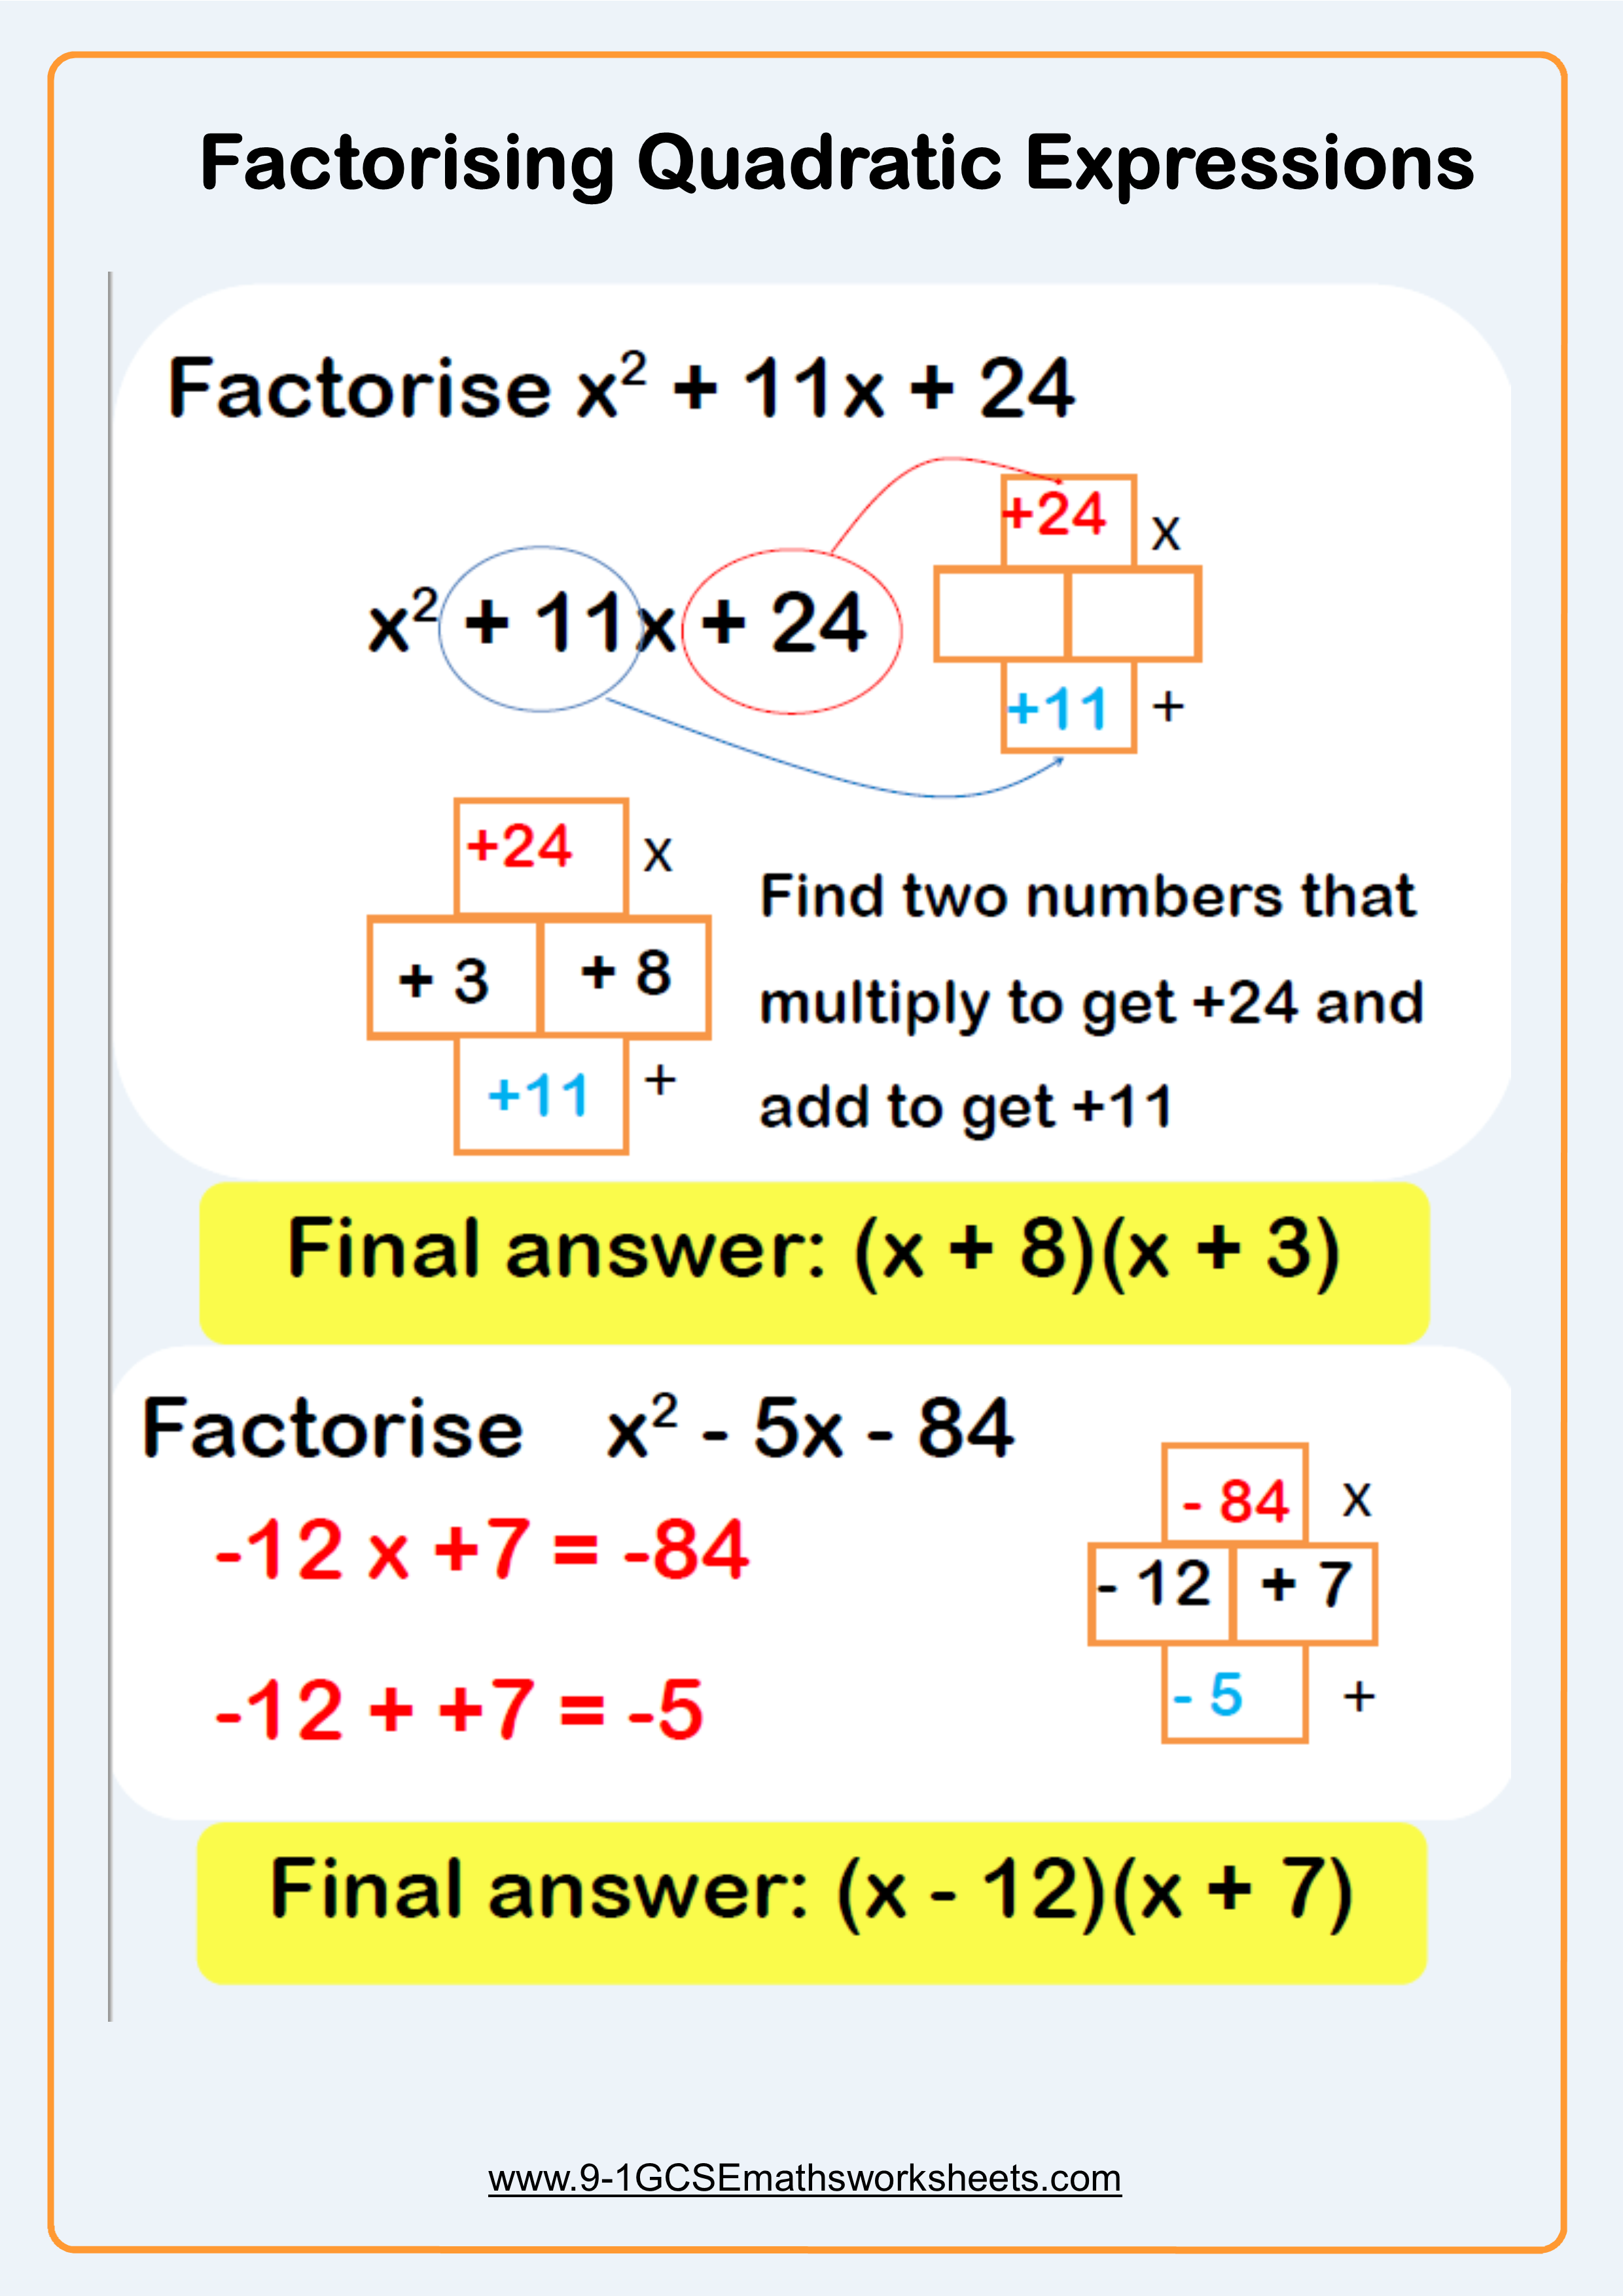 Factorising Quadratics Worksheets - New & Engaging  Cazoomy In Factoring Quadratics Worksheet Answers